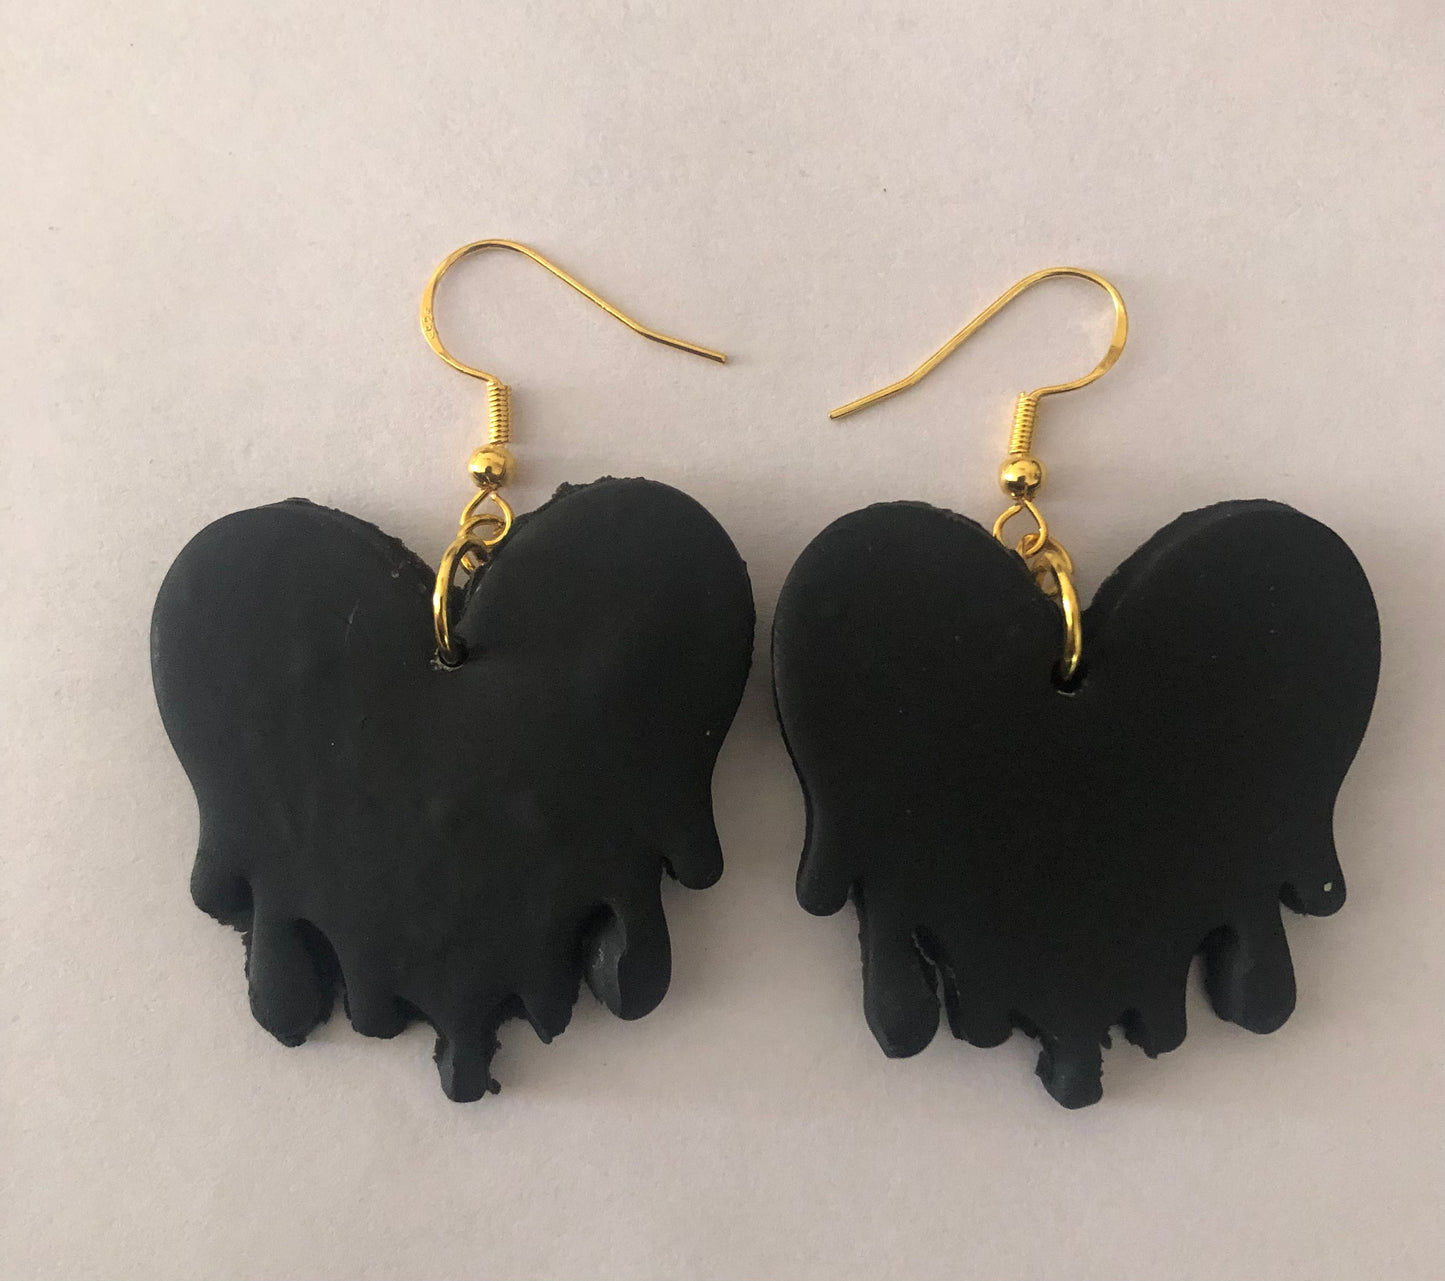 Heart-shaped polymer clay earrings